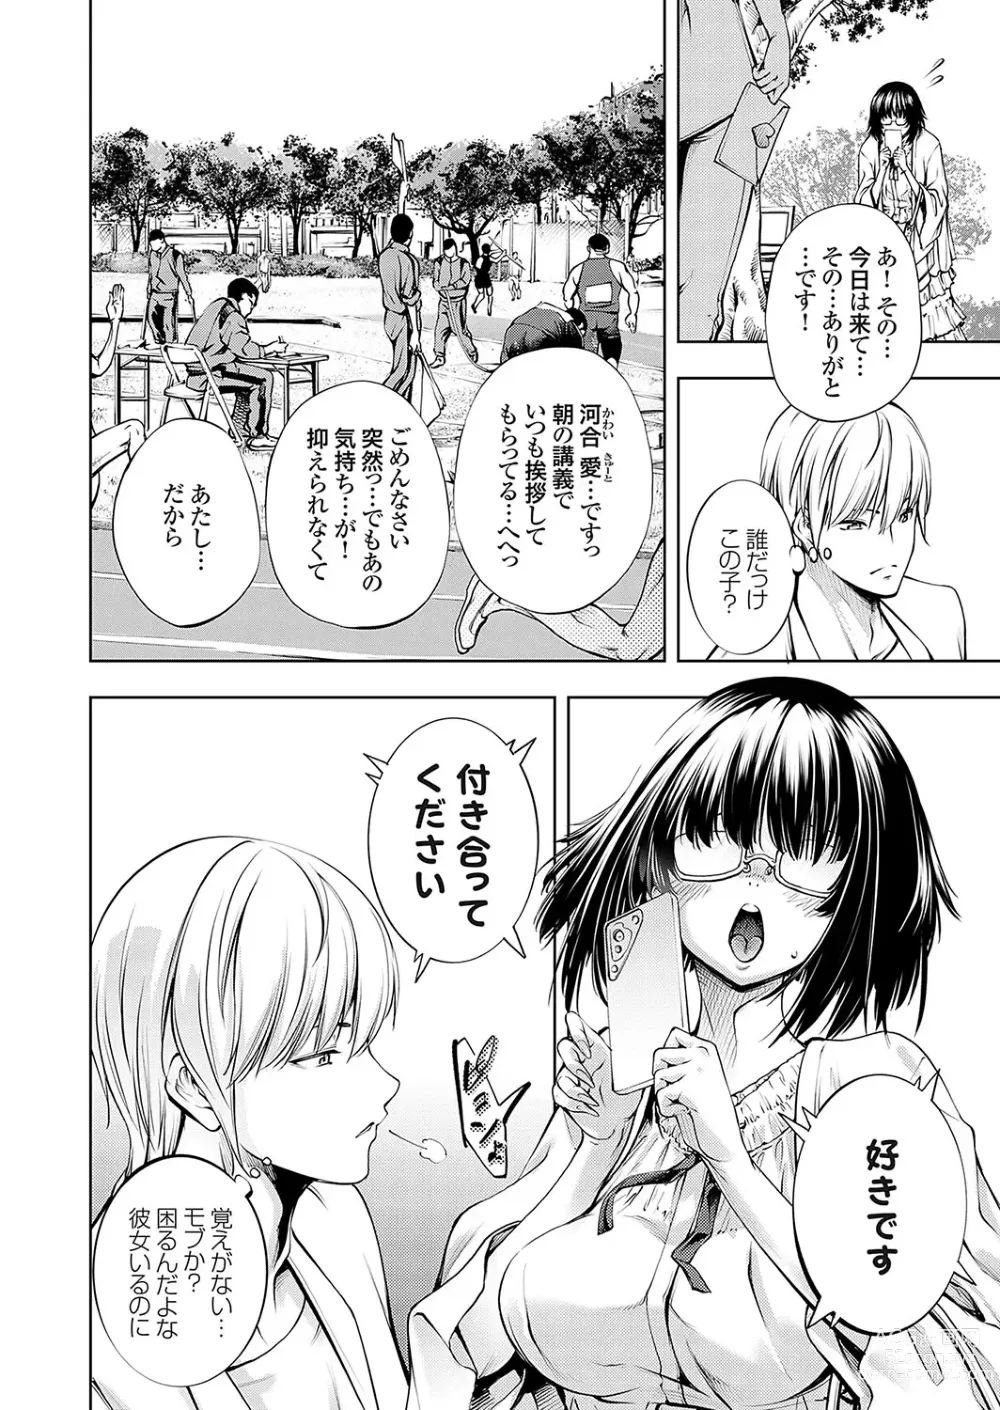 Page 3 of manga COMIC Grape Vol. 123